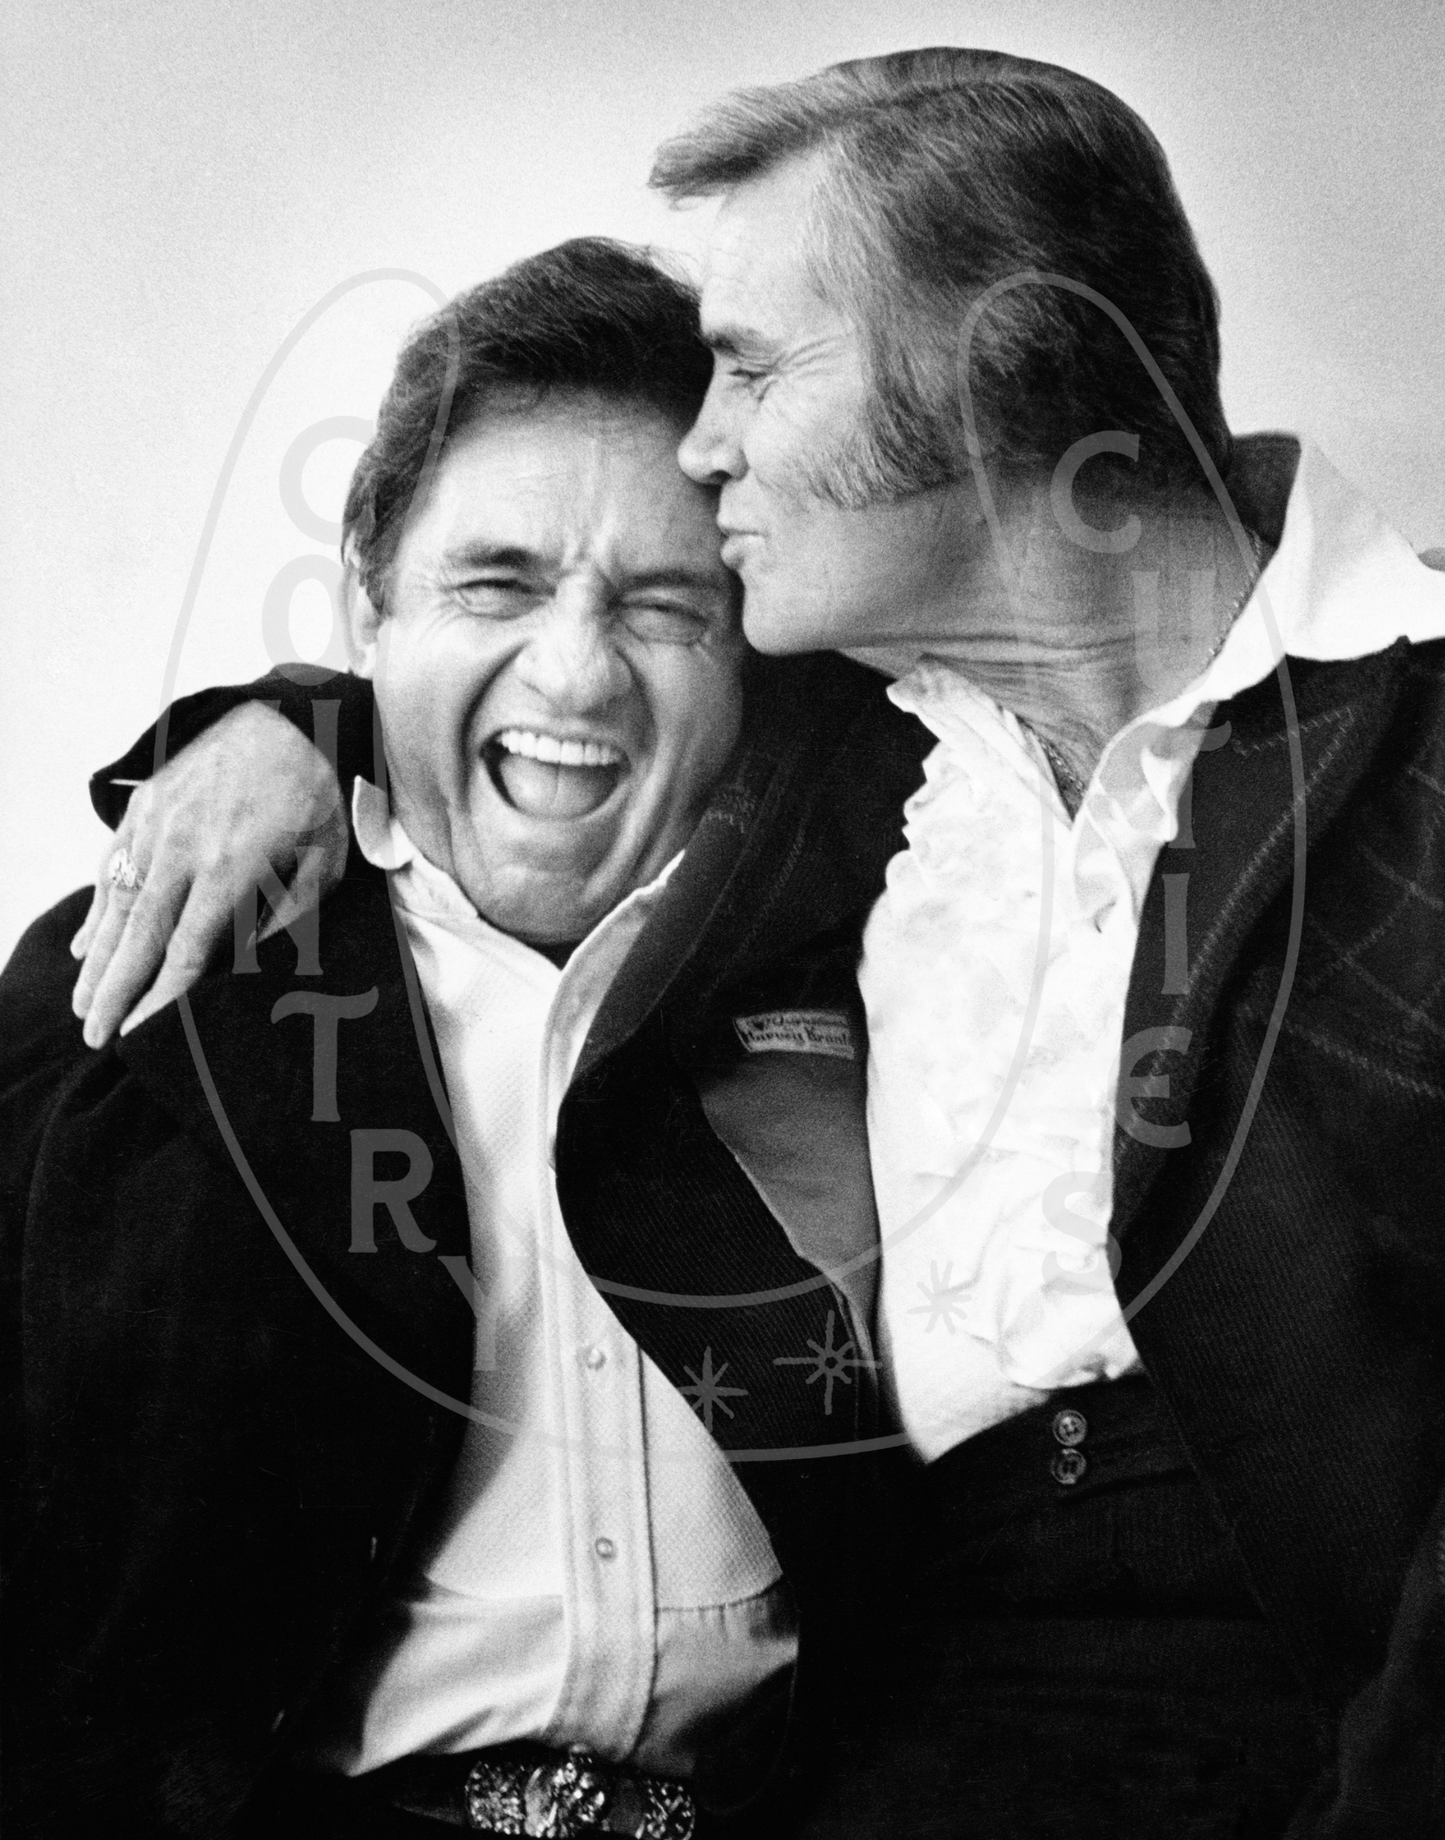 Johnny Cash & George Jones, 1980